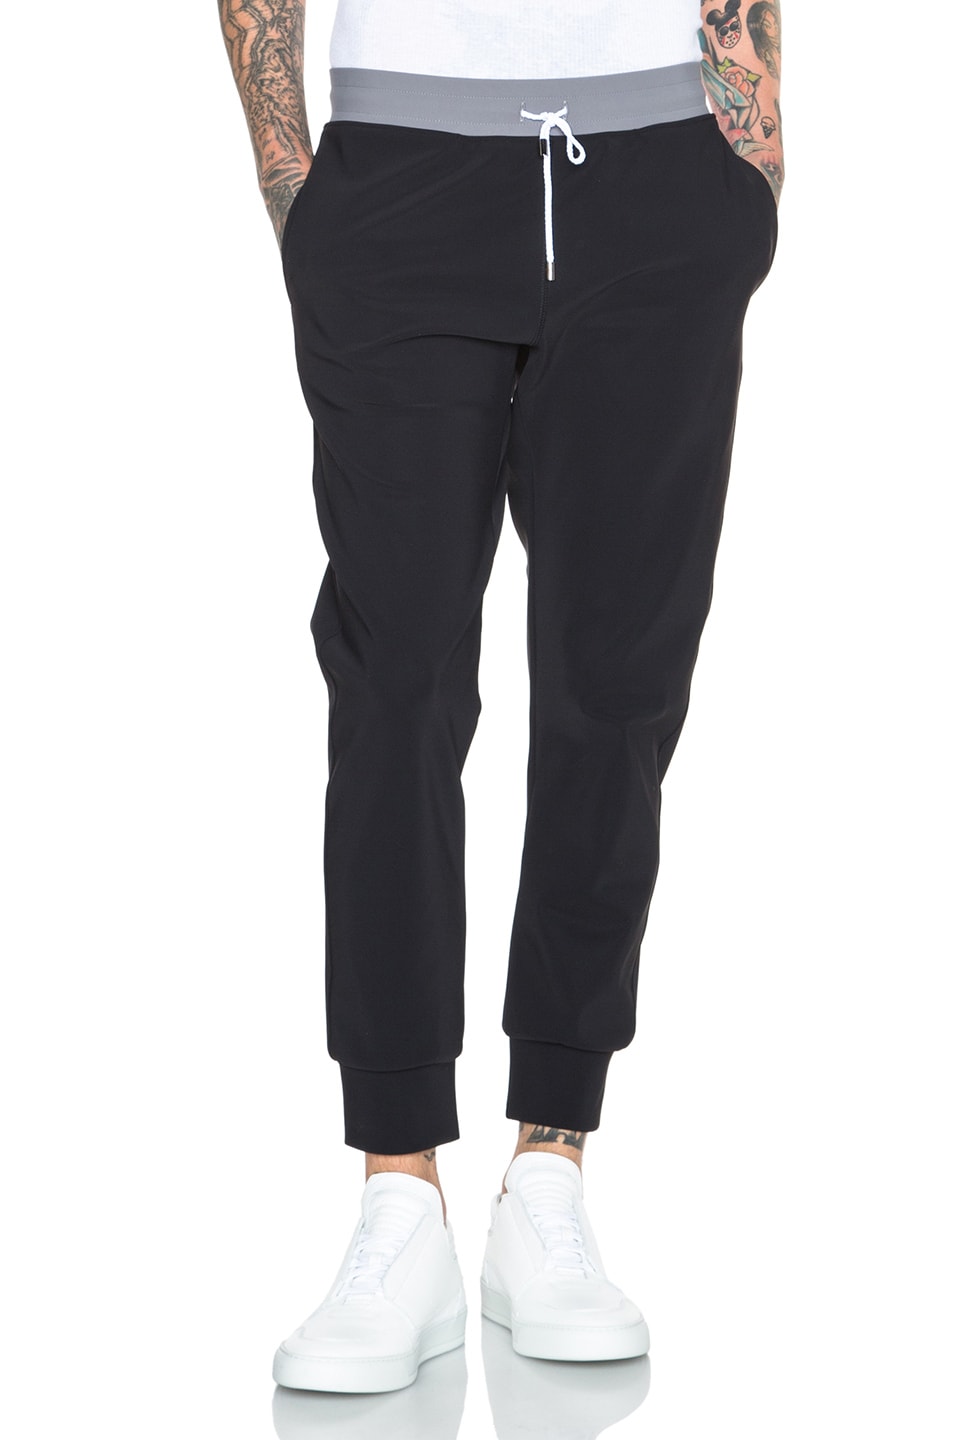 Image 1 of Calvin Klein Collection Ingram Active Jersey Sport Pant in Black & Hudson